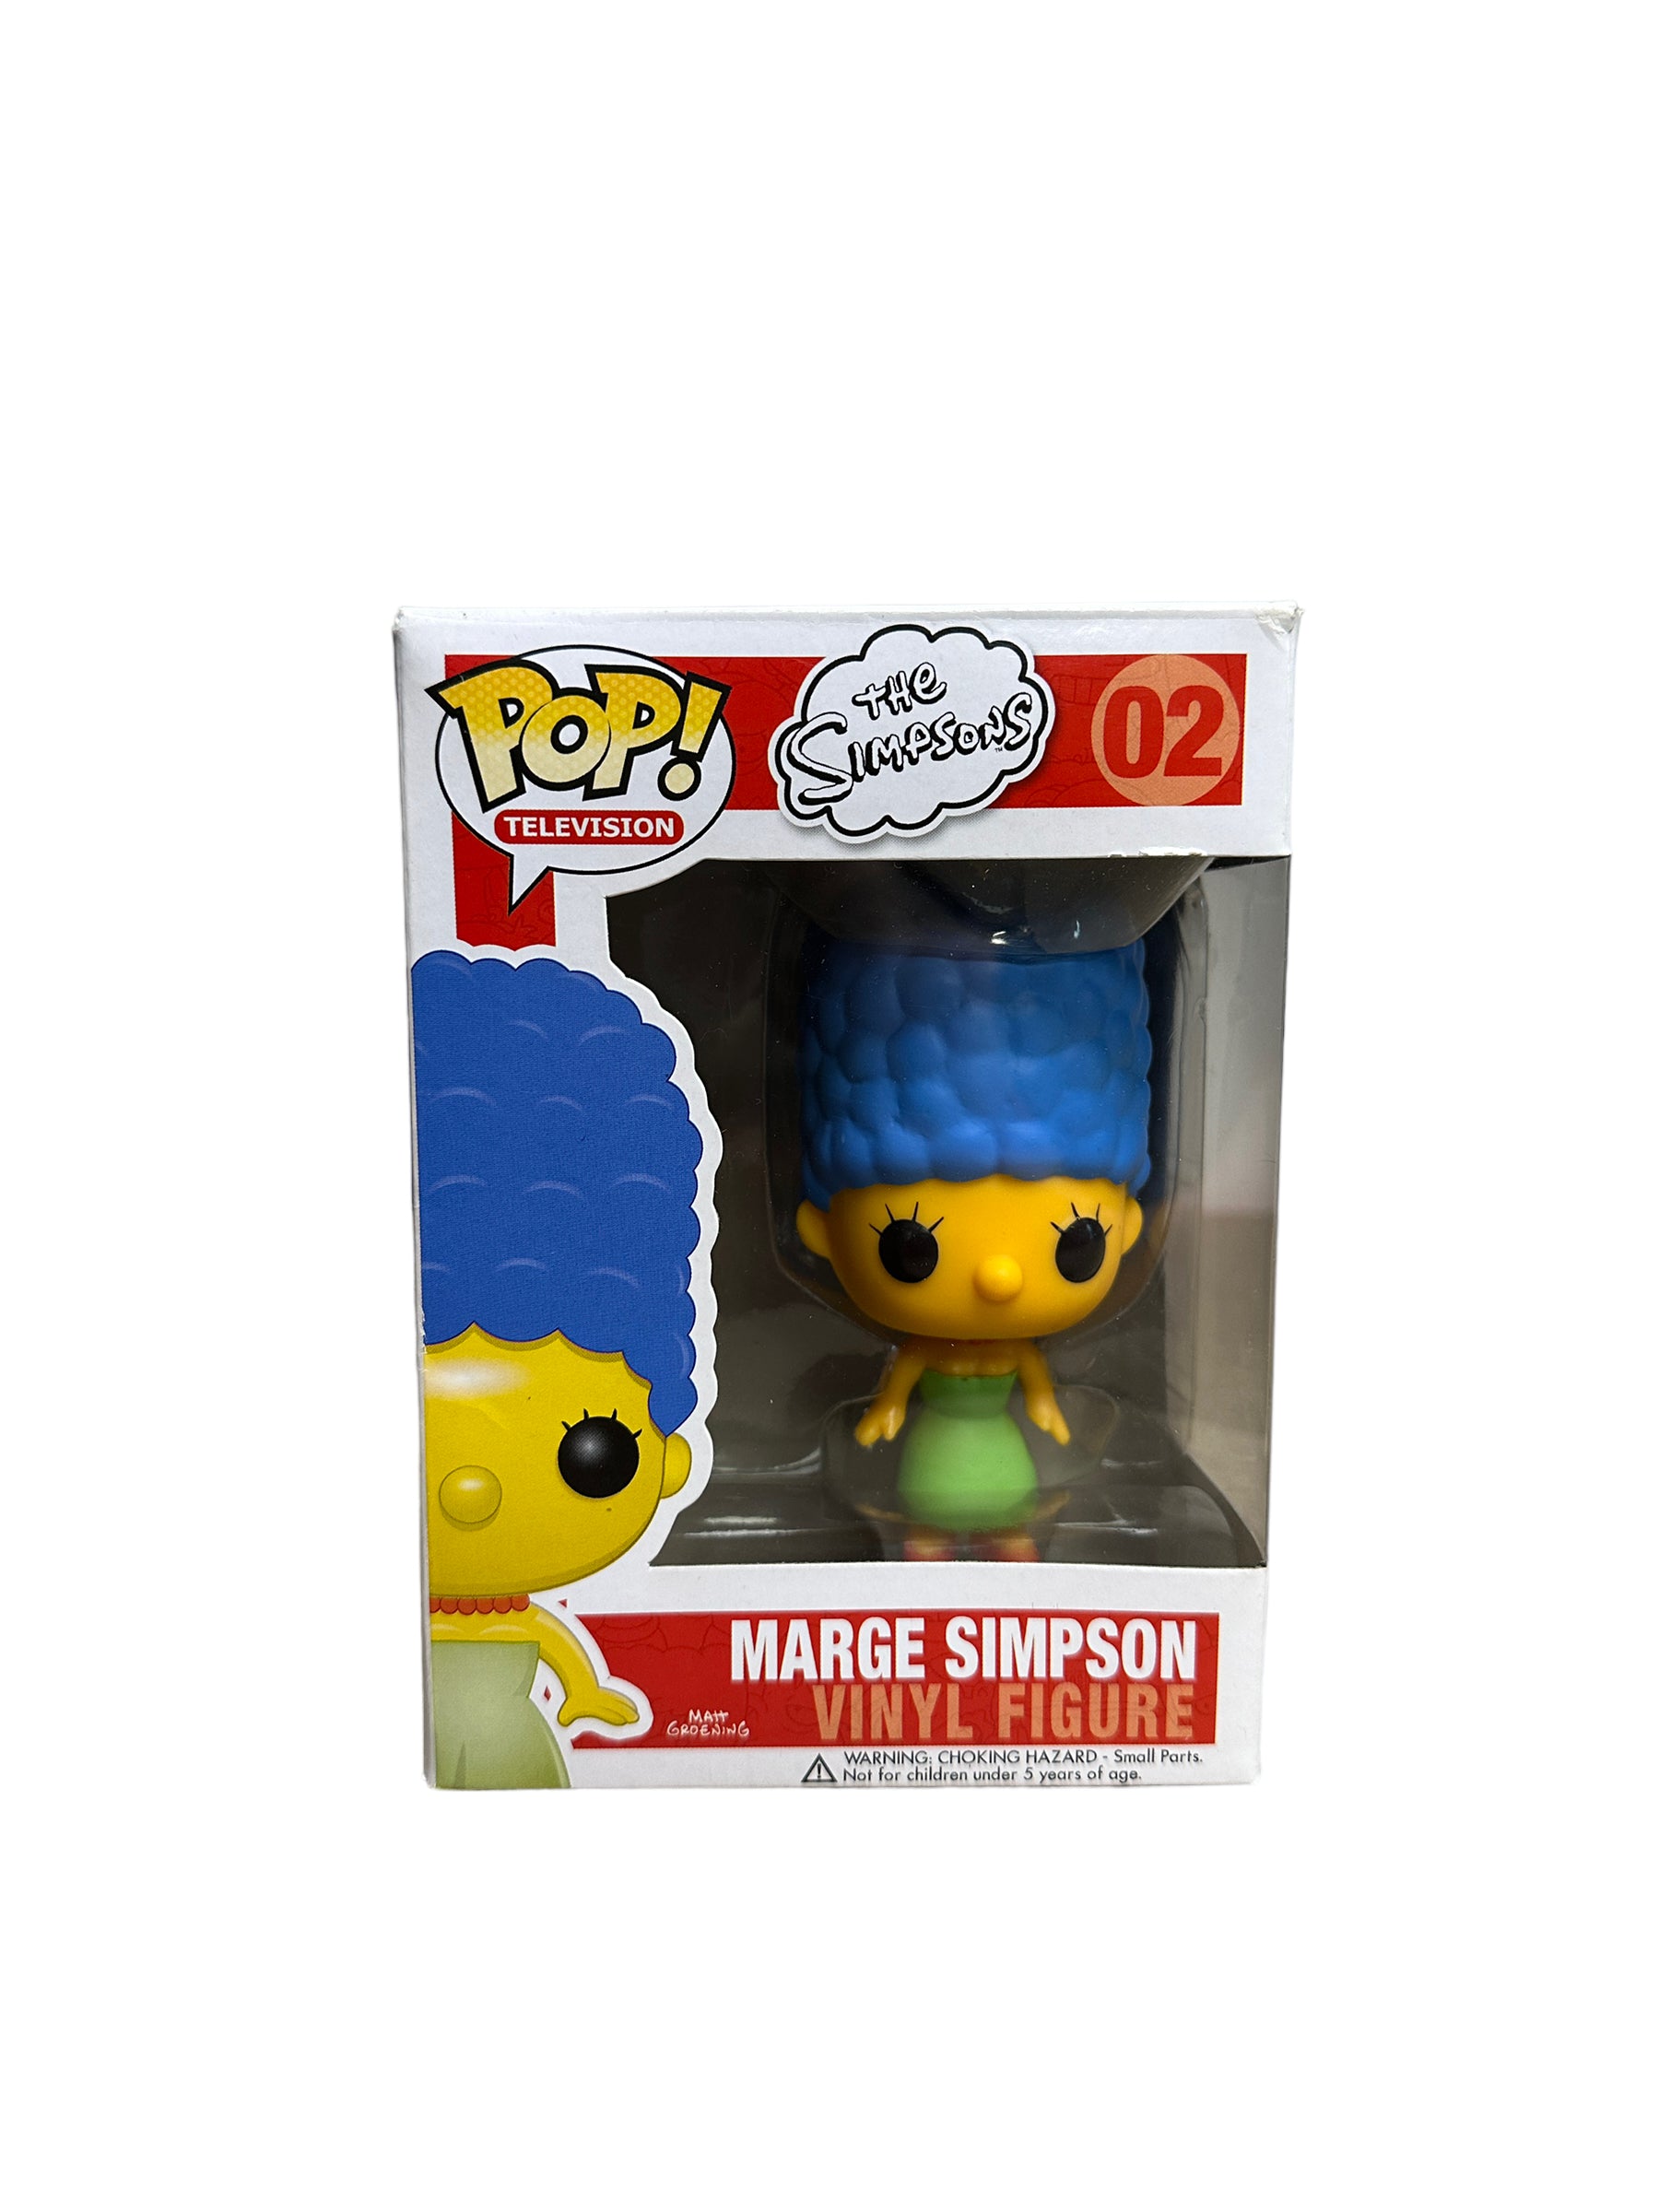 Marge Simpson #02 Funko Pop! - The Simpsons - 2011 Pop! - Condition 7/10